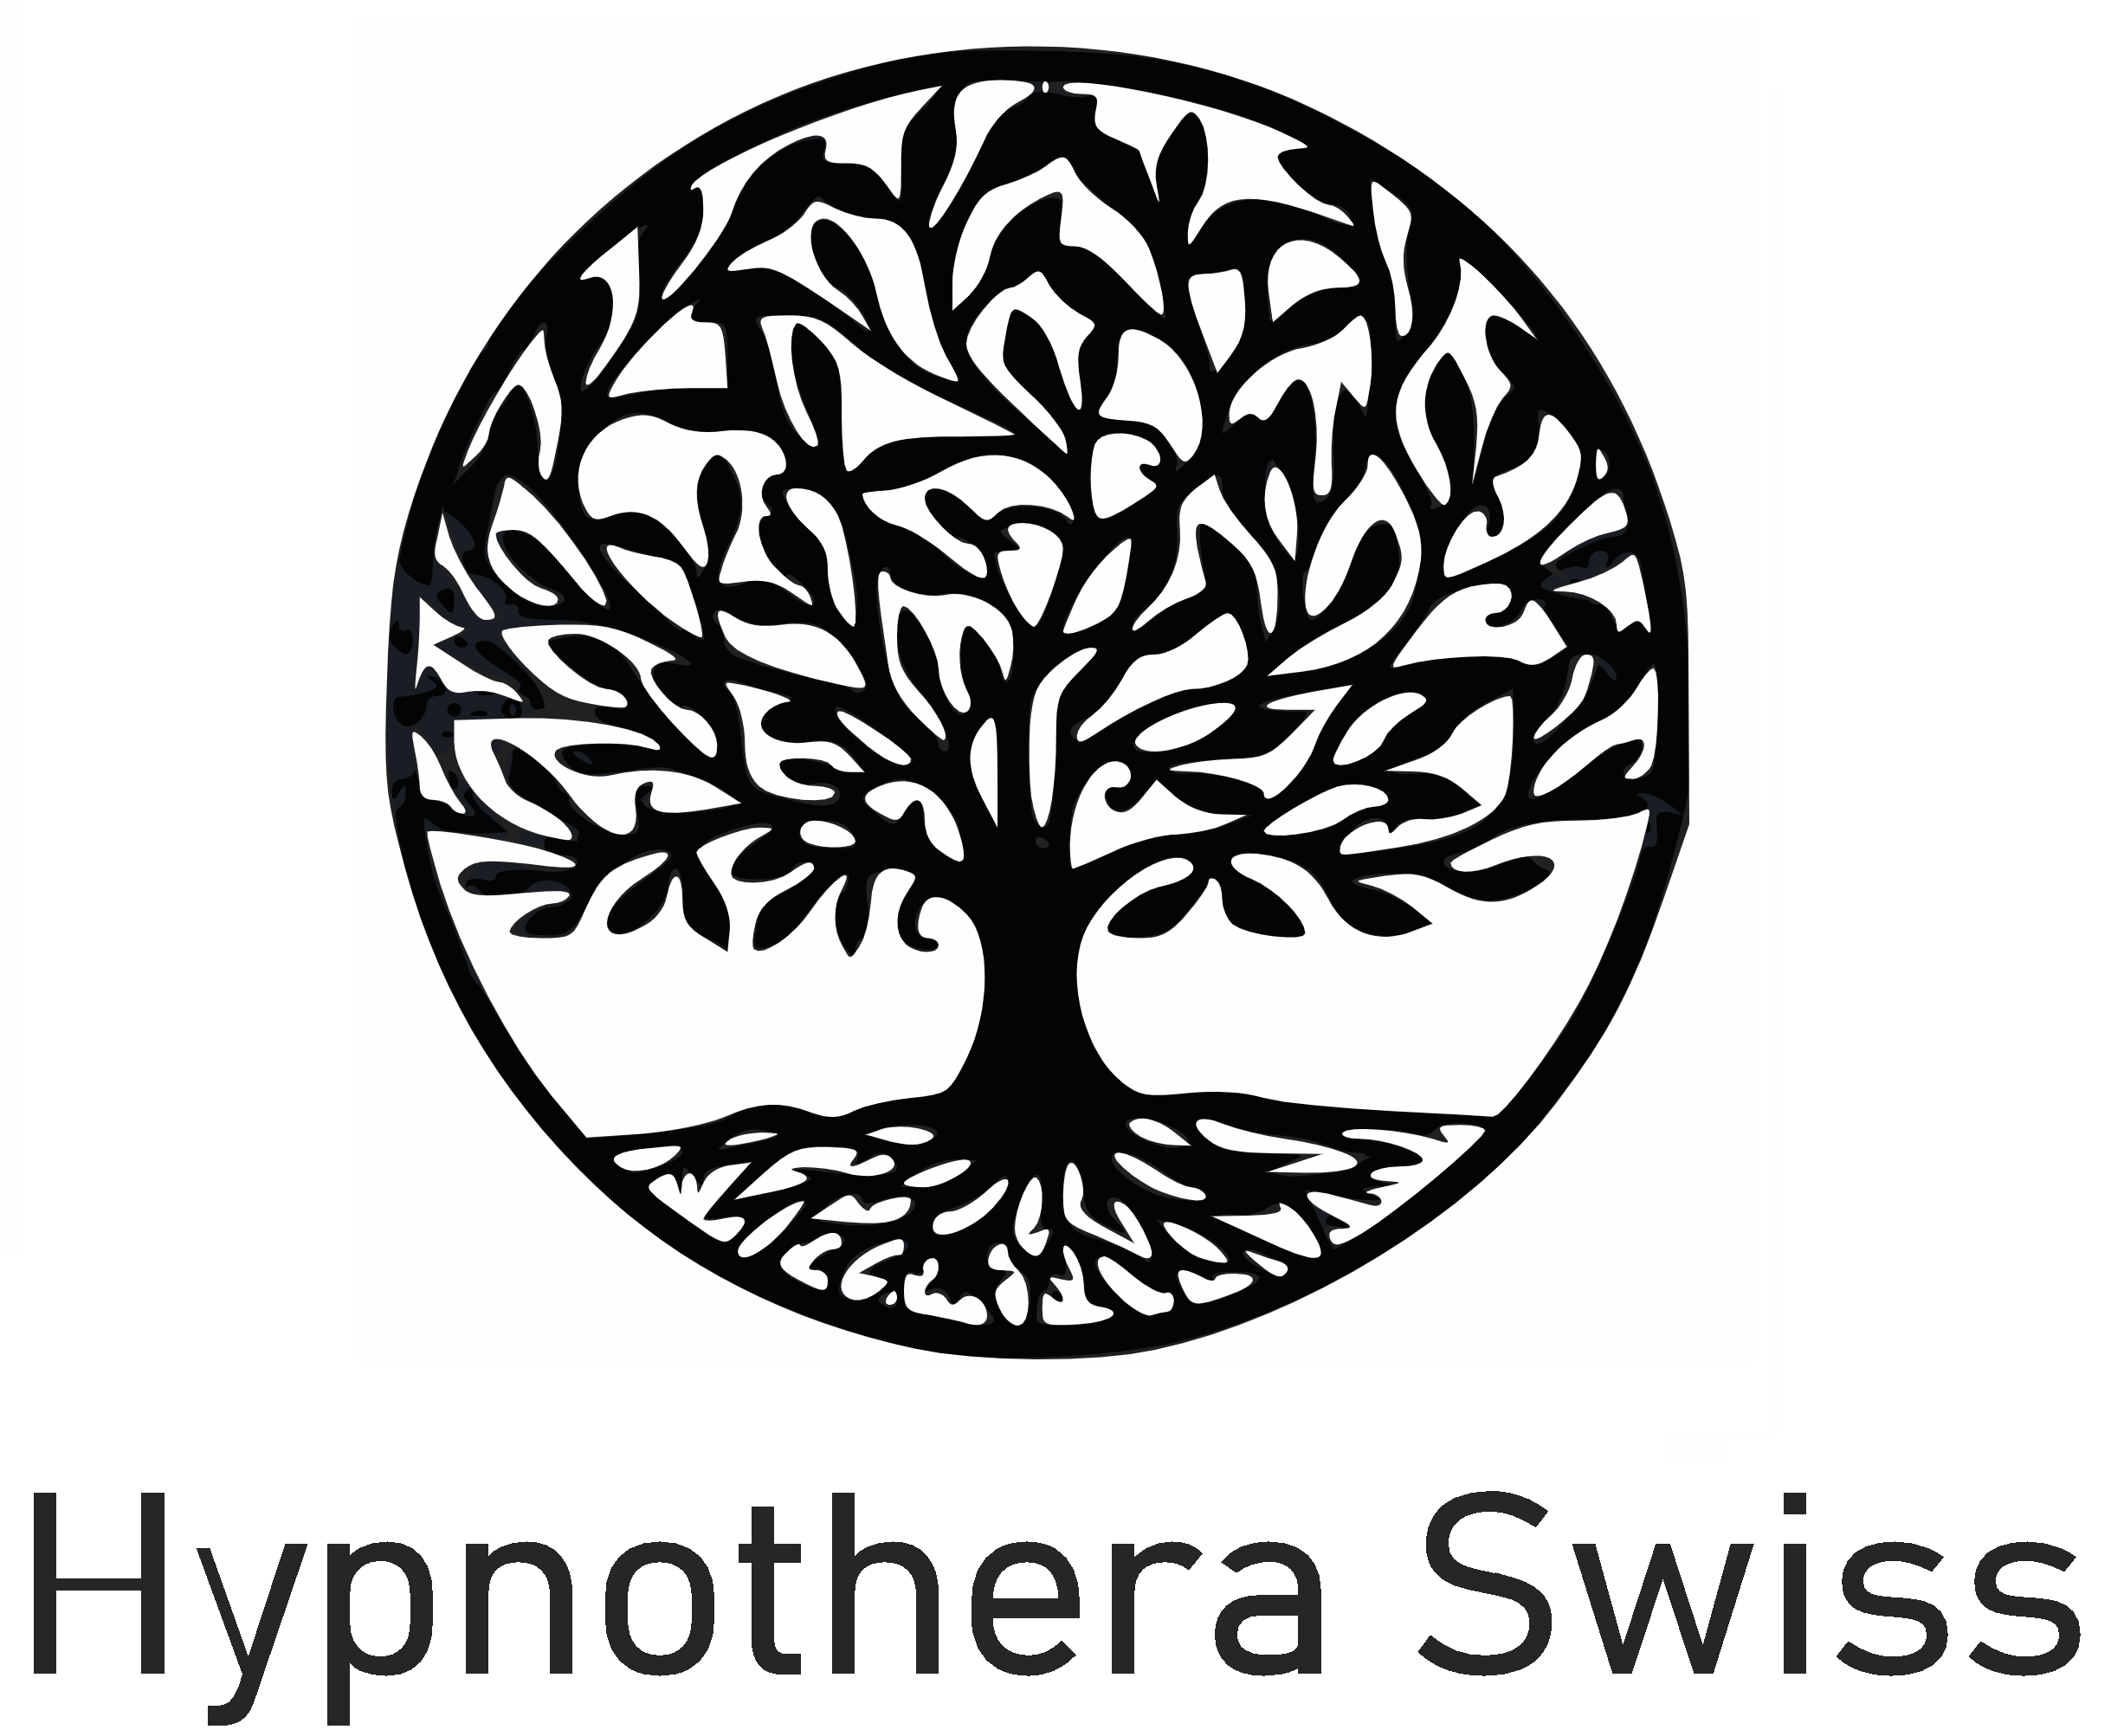 Hypnothera Swiss